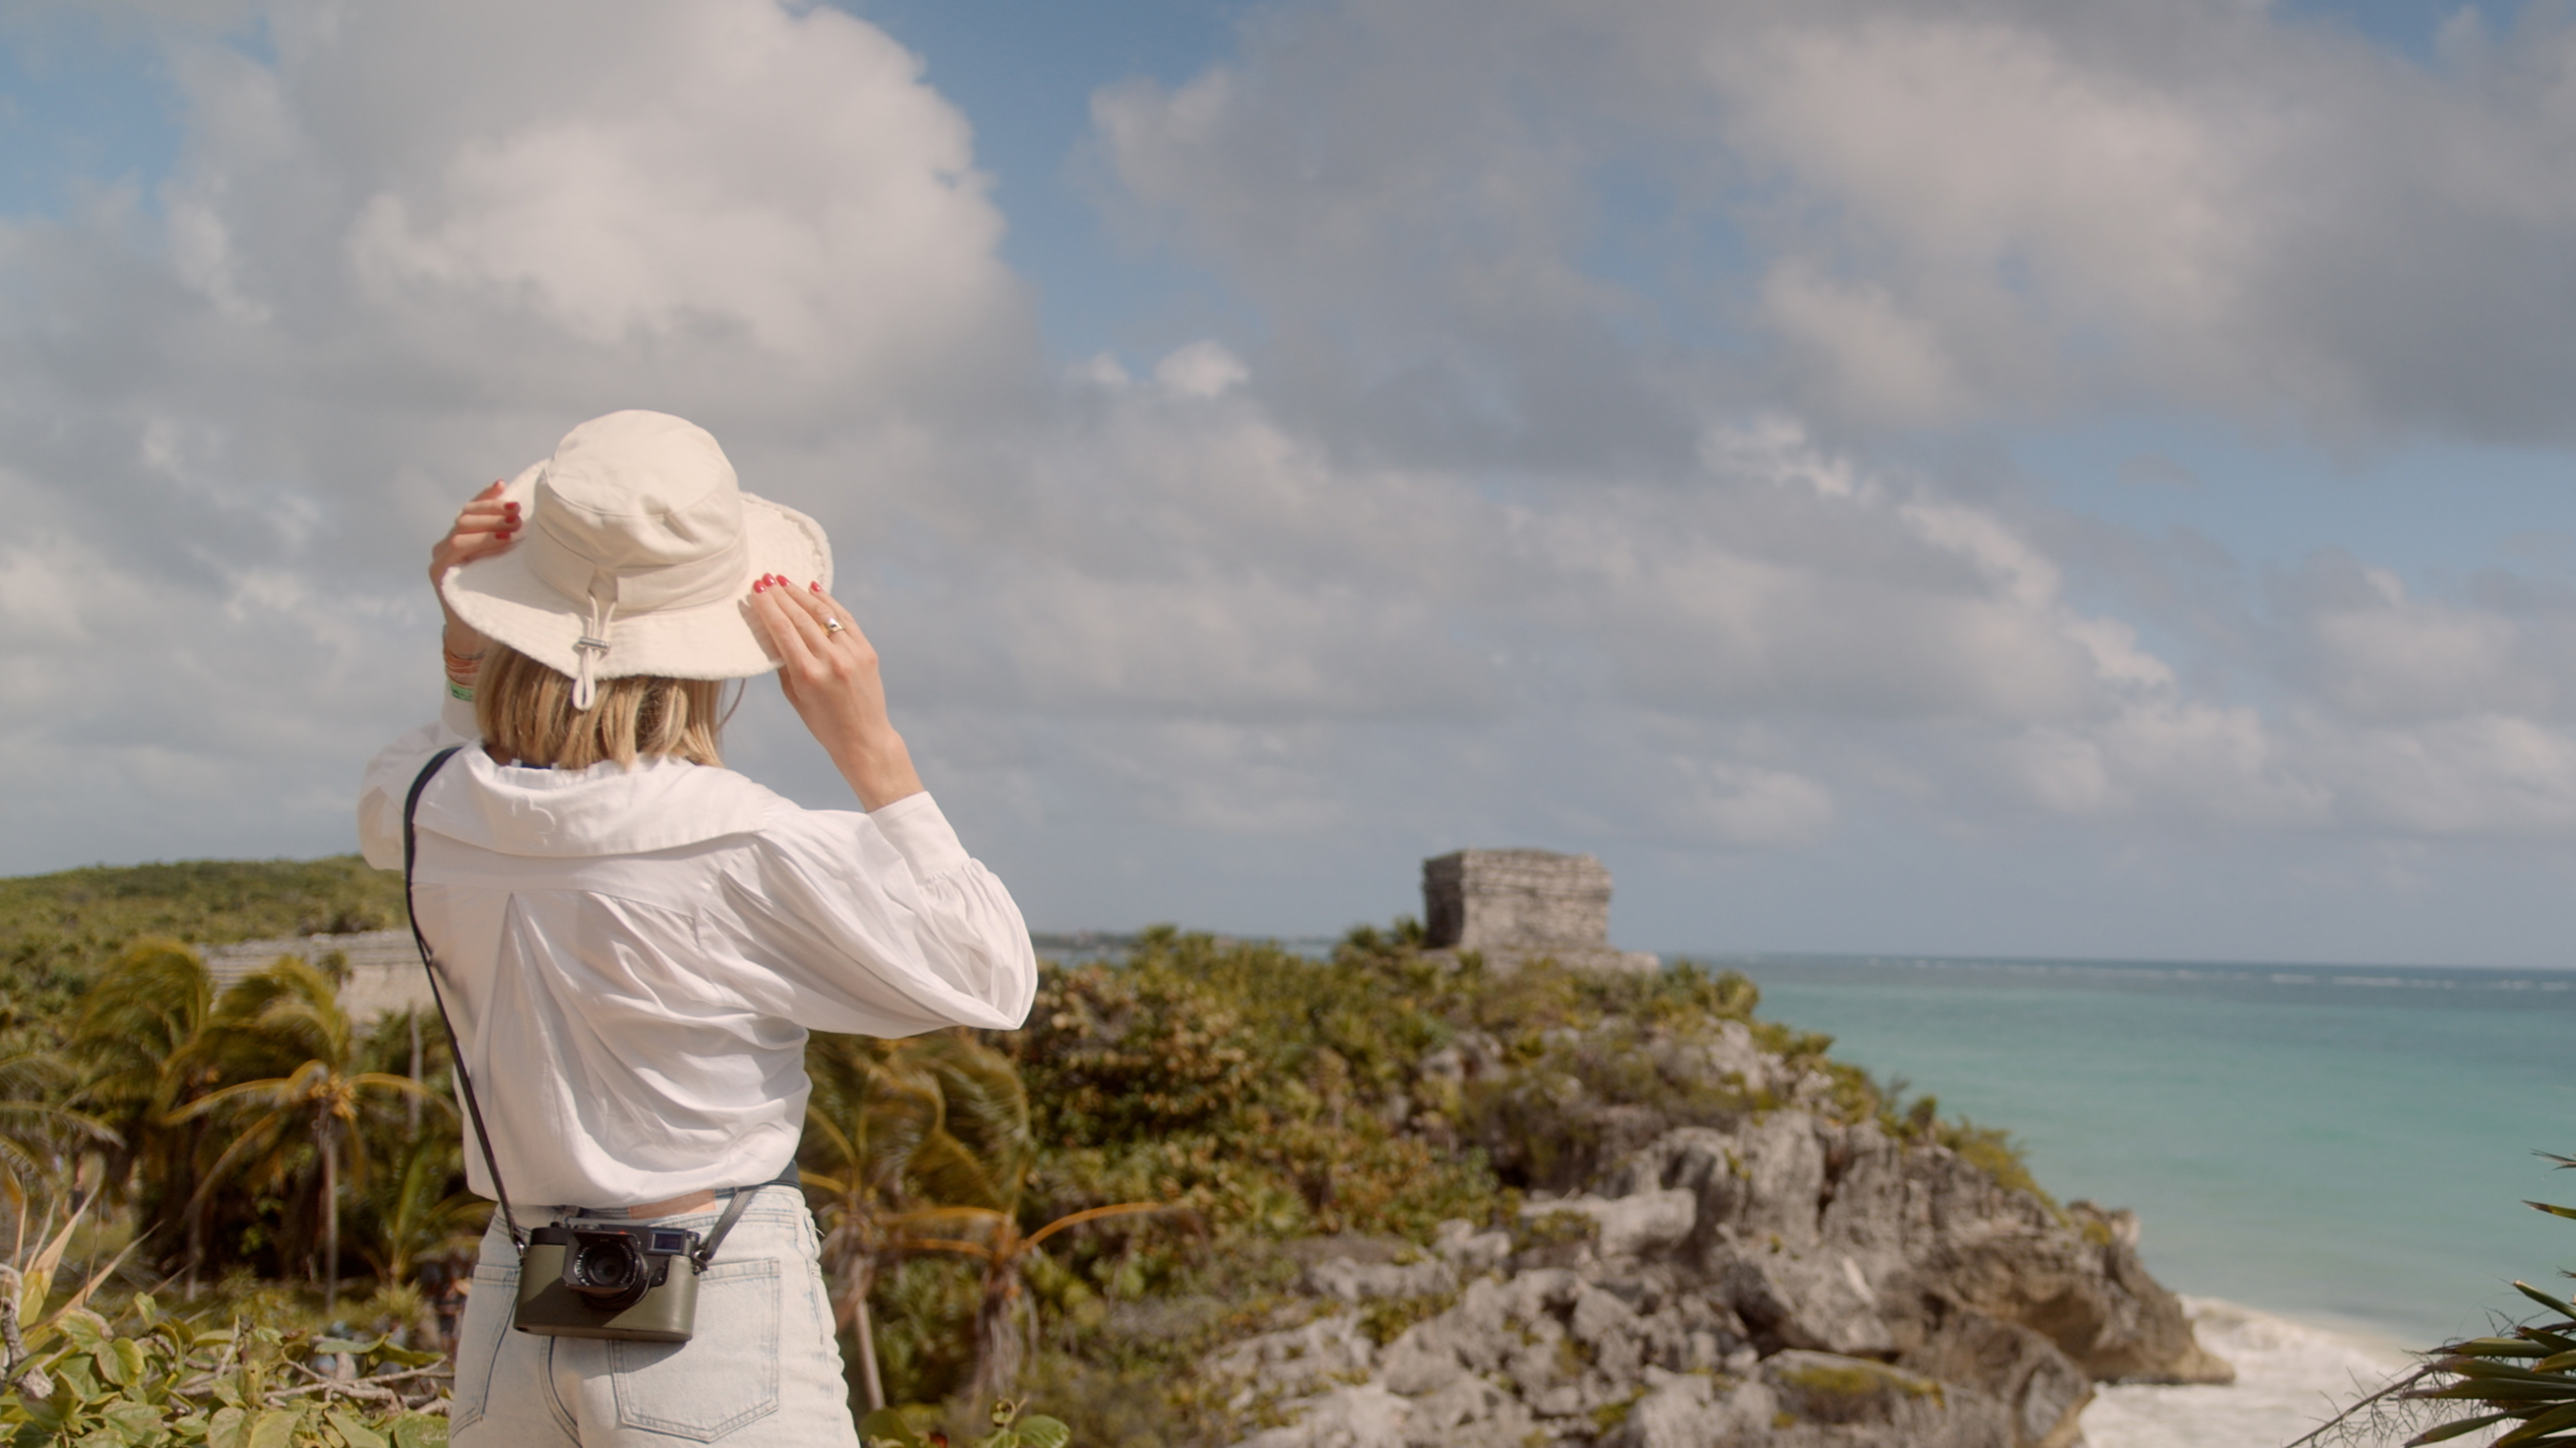 CUN1_B-roll Stills_Mayan temple overlooking the Caribbean Sea.jpg